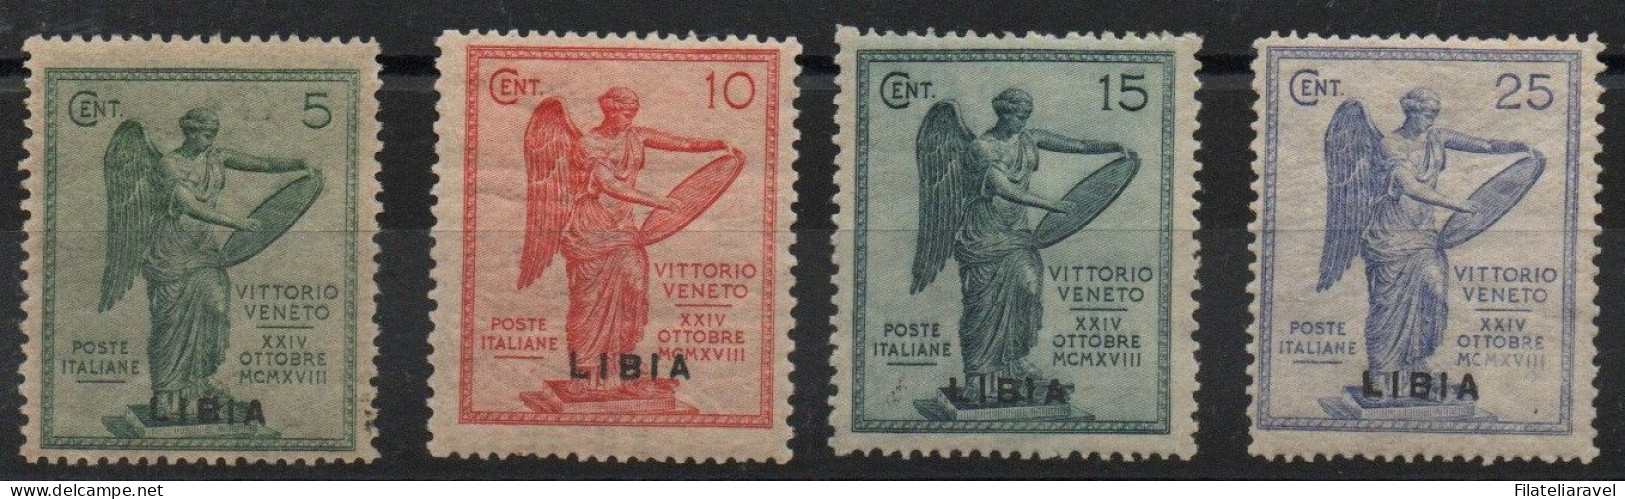 COLONIE ITALIANE - LIBIA 1922 " Vittoria "Catalogo Sassone 34/34, Serie Completa 4 Valori Gomma Integra. - Libya